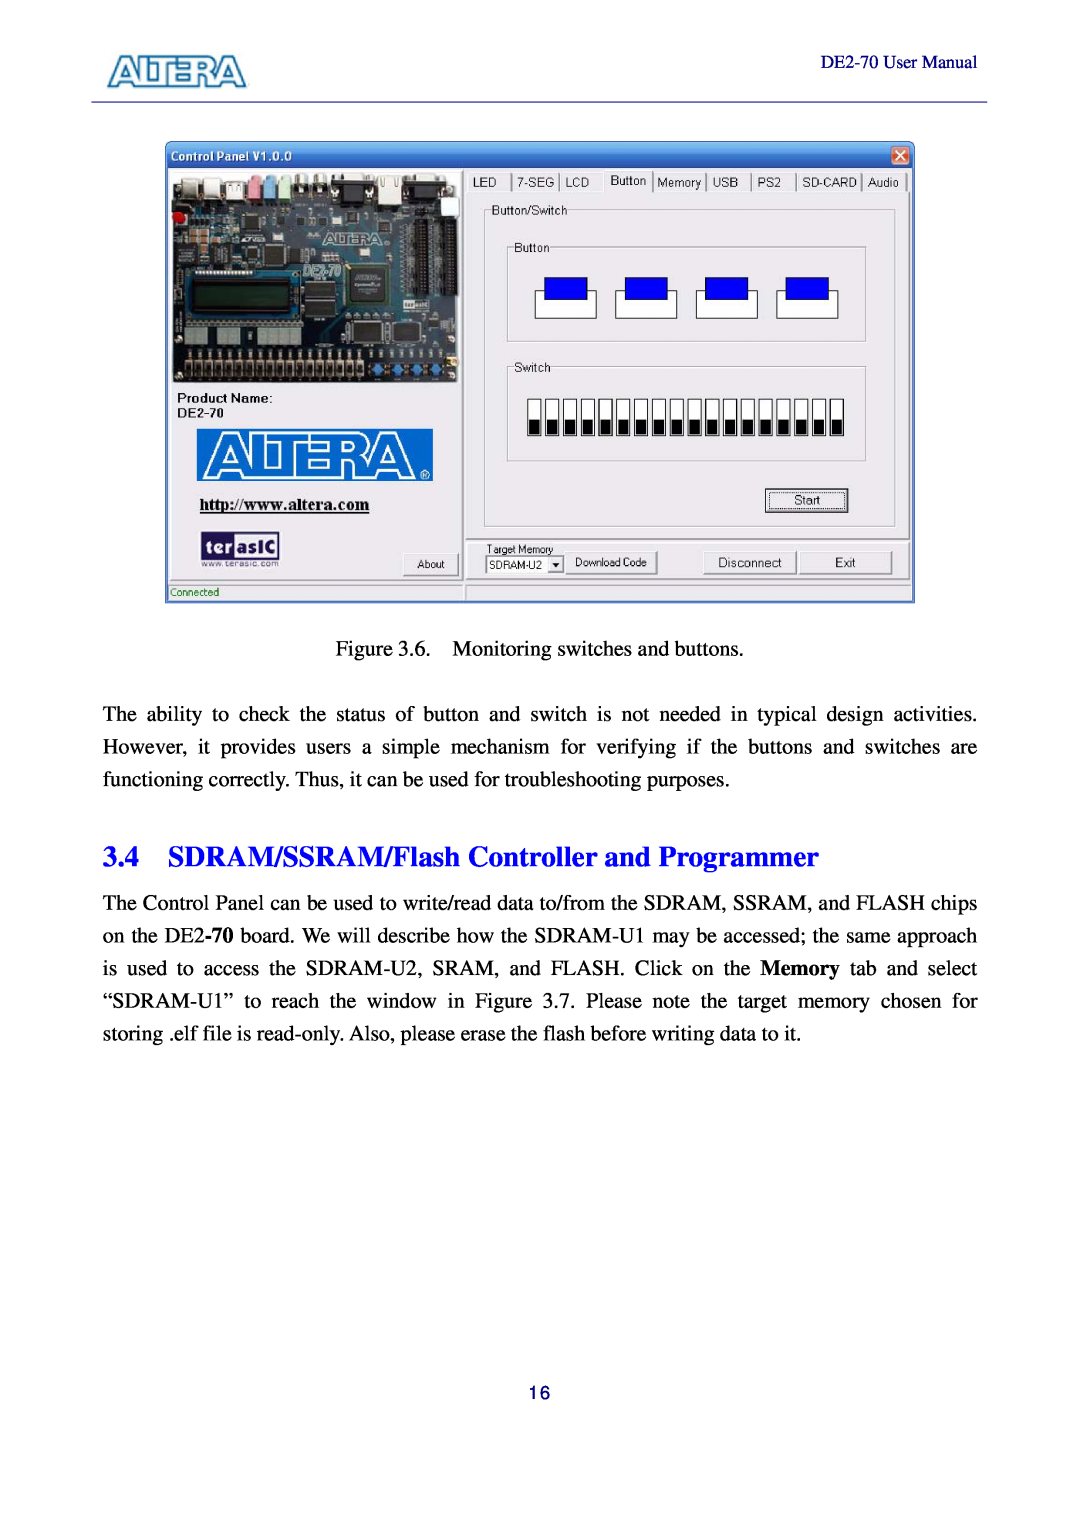 Sigma DE2-70 manual SDRAM/SSRAM/Flash Controller and Programmer 